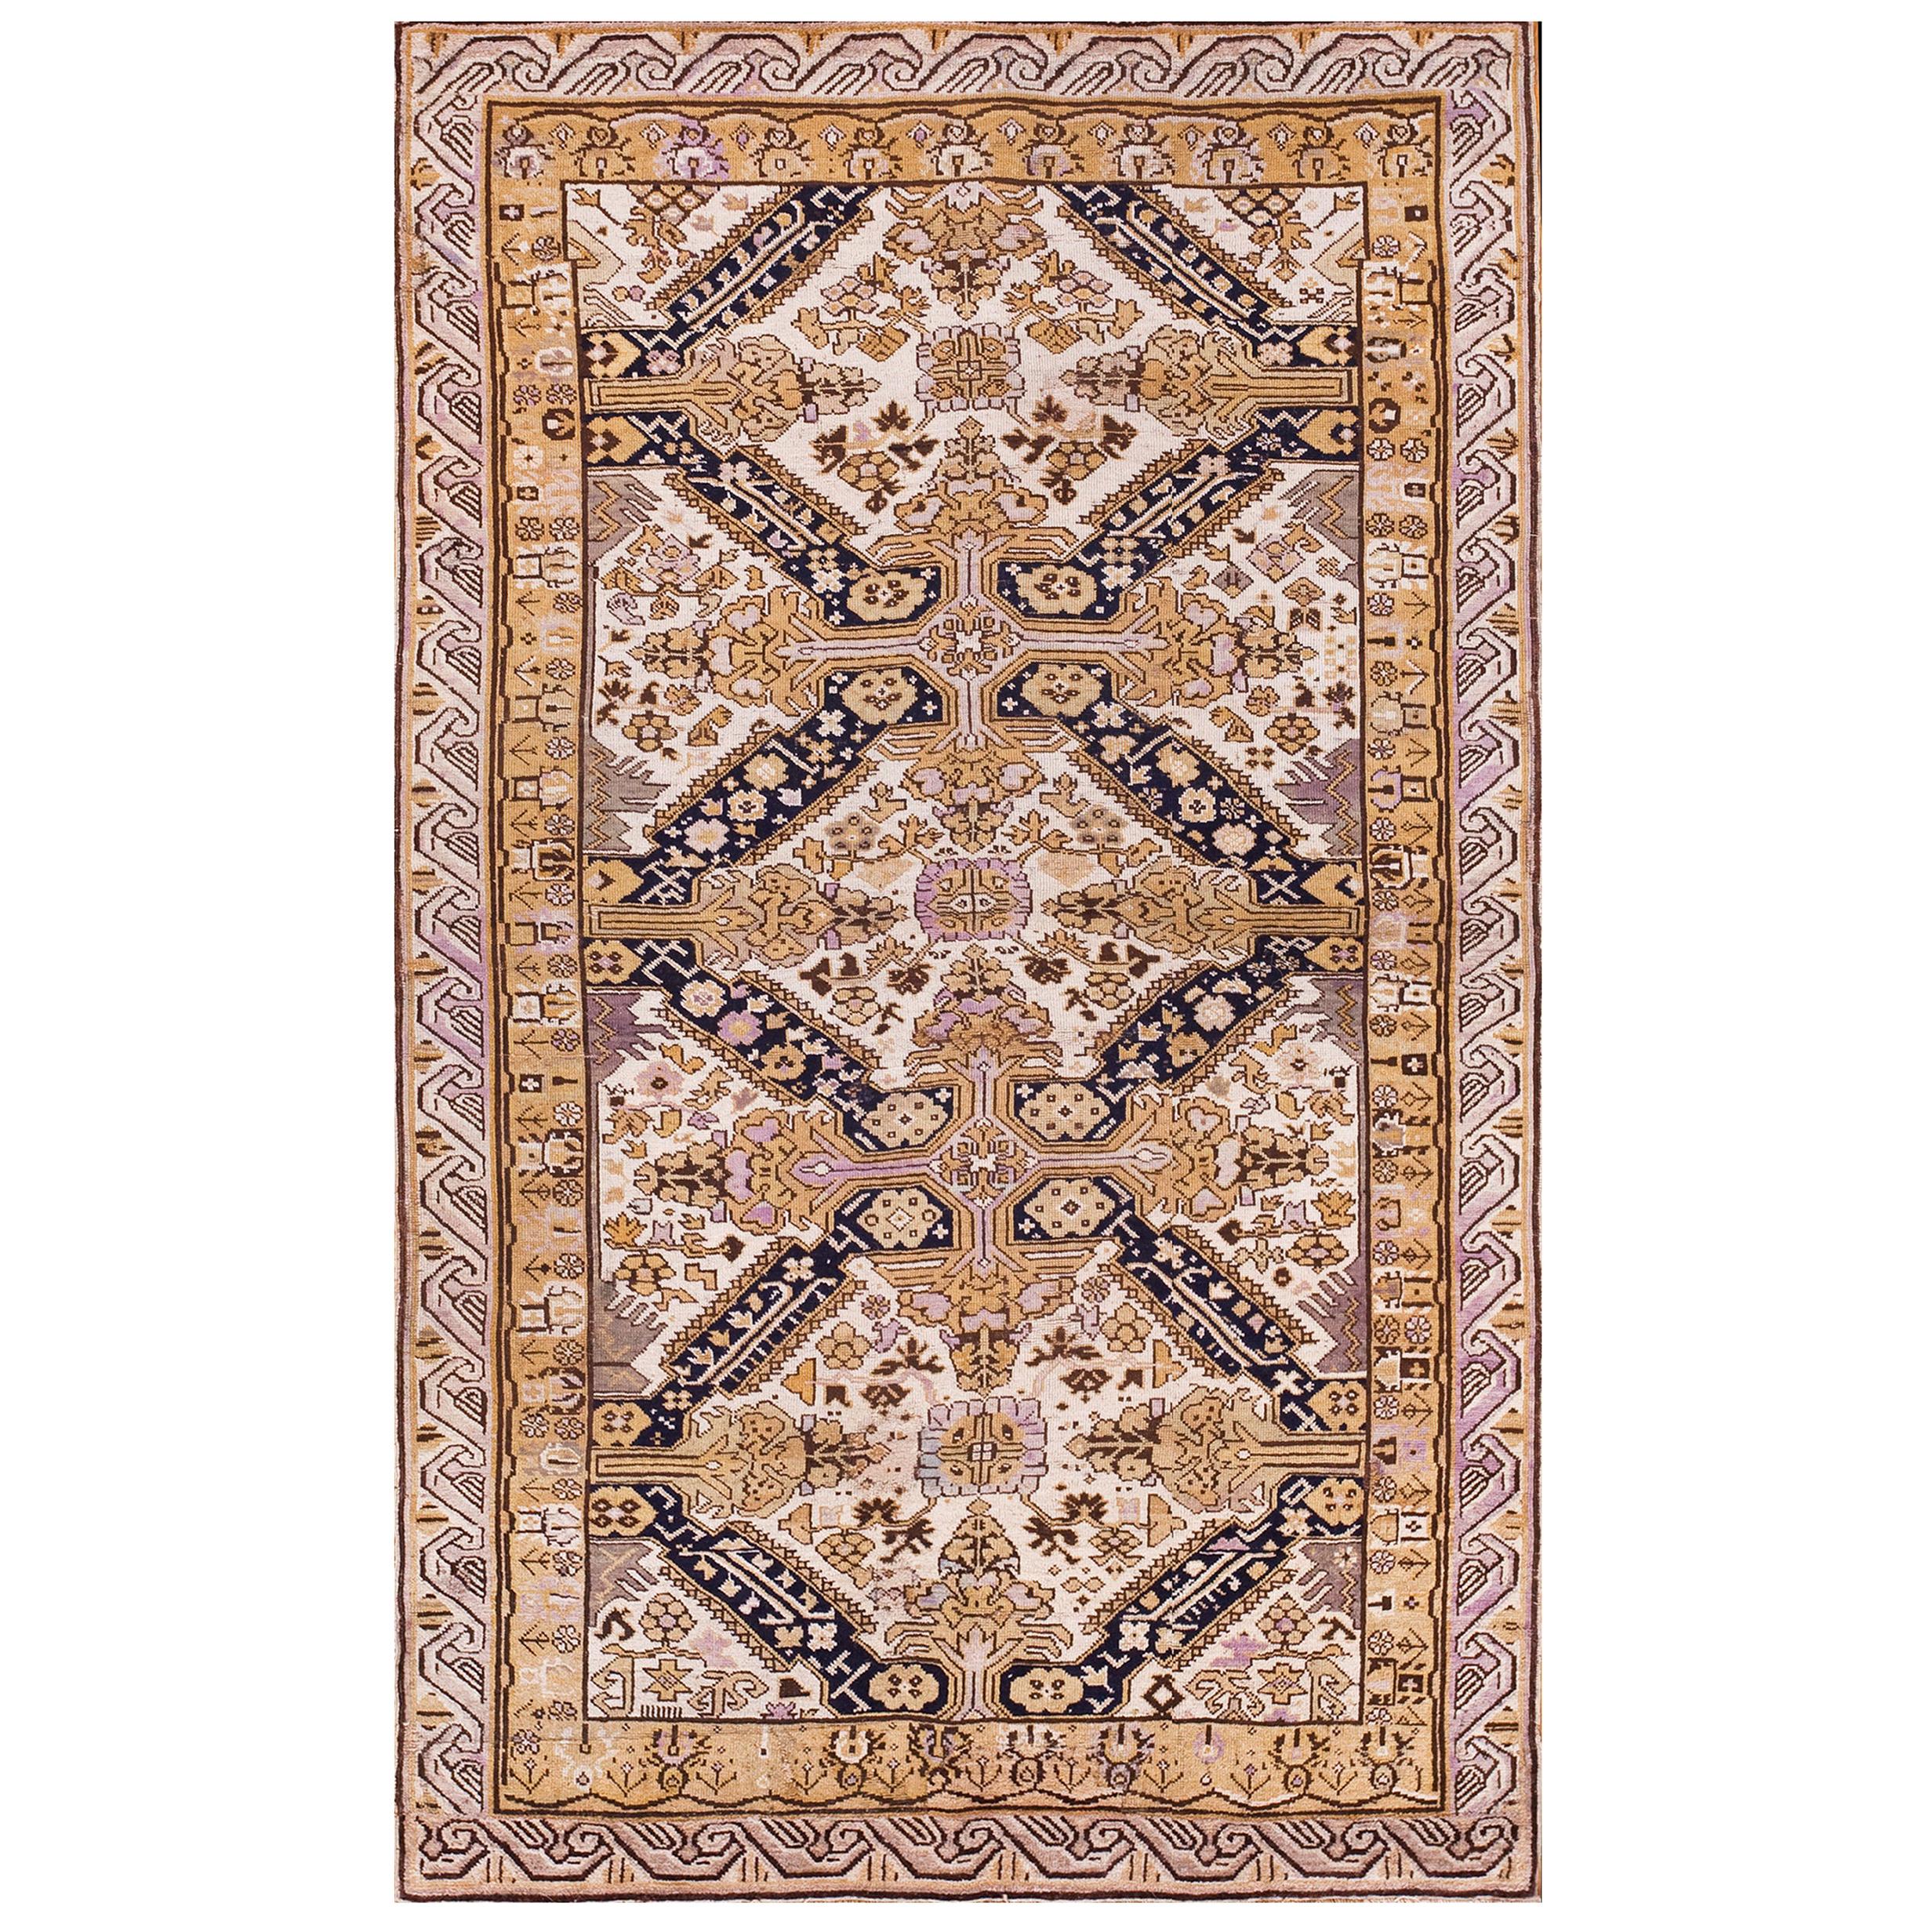 Early 20th Century Caucasian Zeychor Carpet ( 3'9" x 6'6" - 114 x 198 ) For Sale